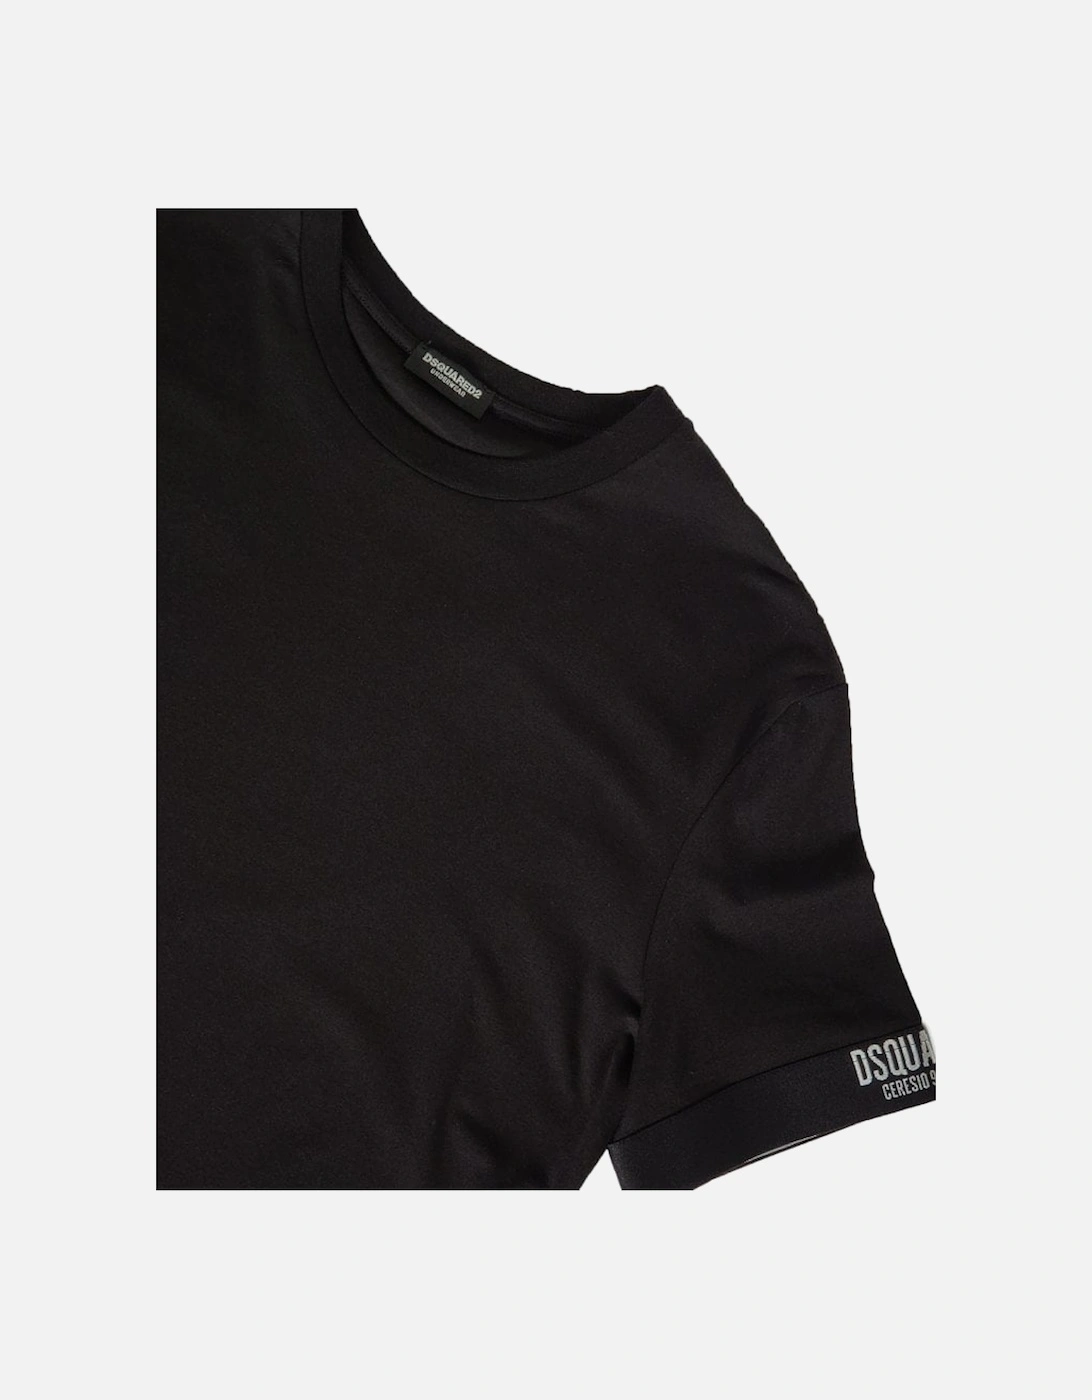 D Squared Crew Neck Tee Shirt Milano Arm Cuff Black